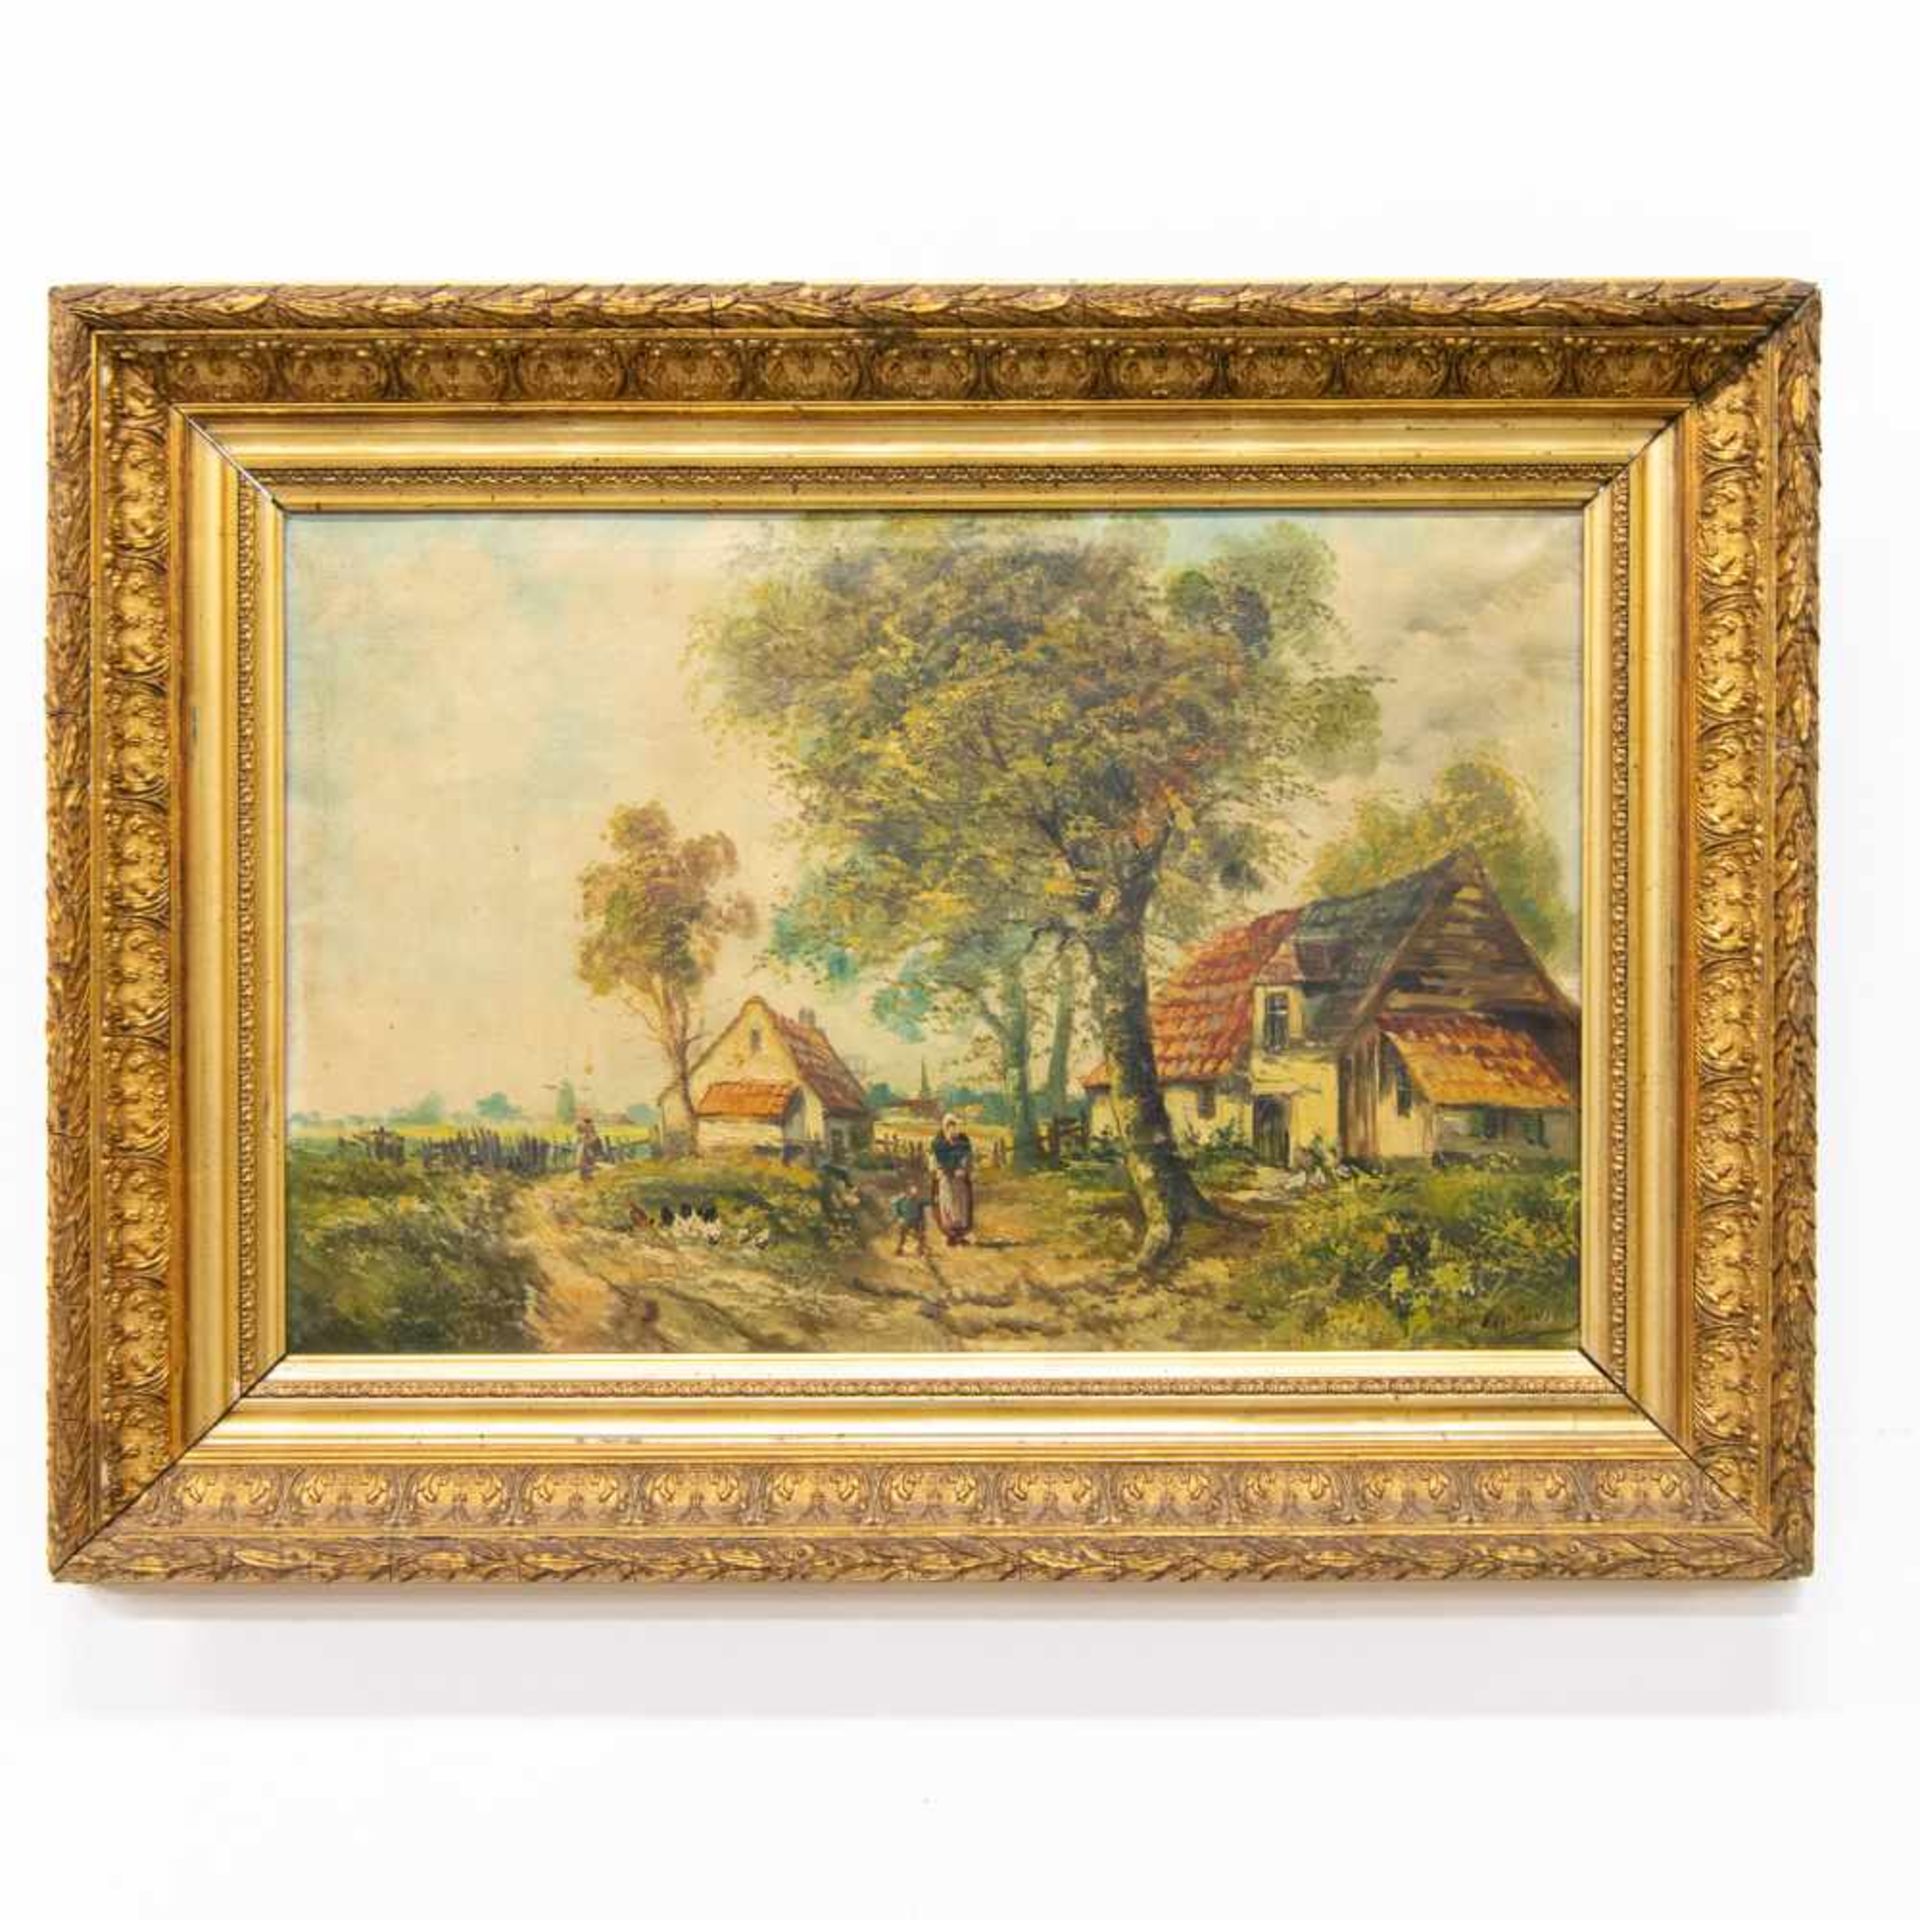 Unsigned, Farmer's Landscape, Oil/canvas, Gilt frame Length: 0 cm , Width: 97 cm, Hight: 74 cm,